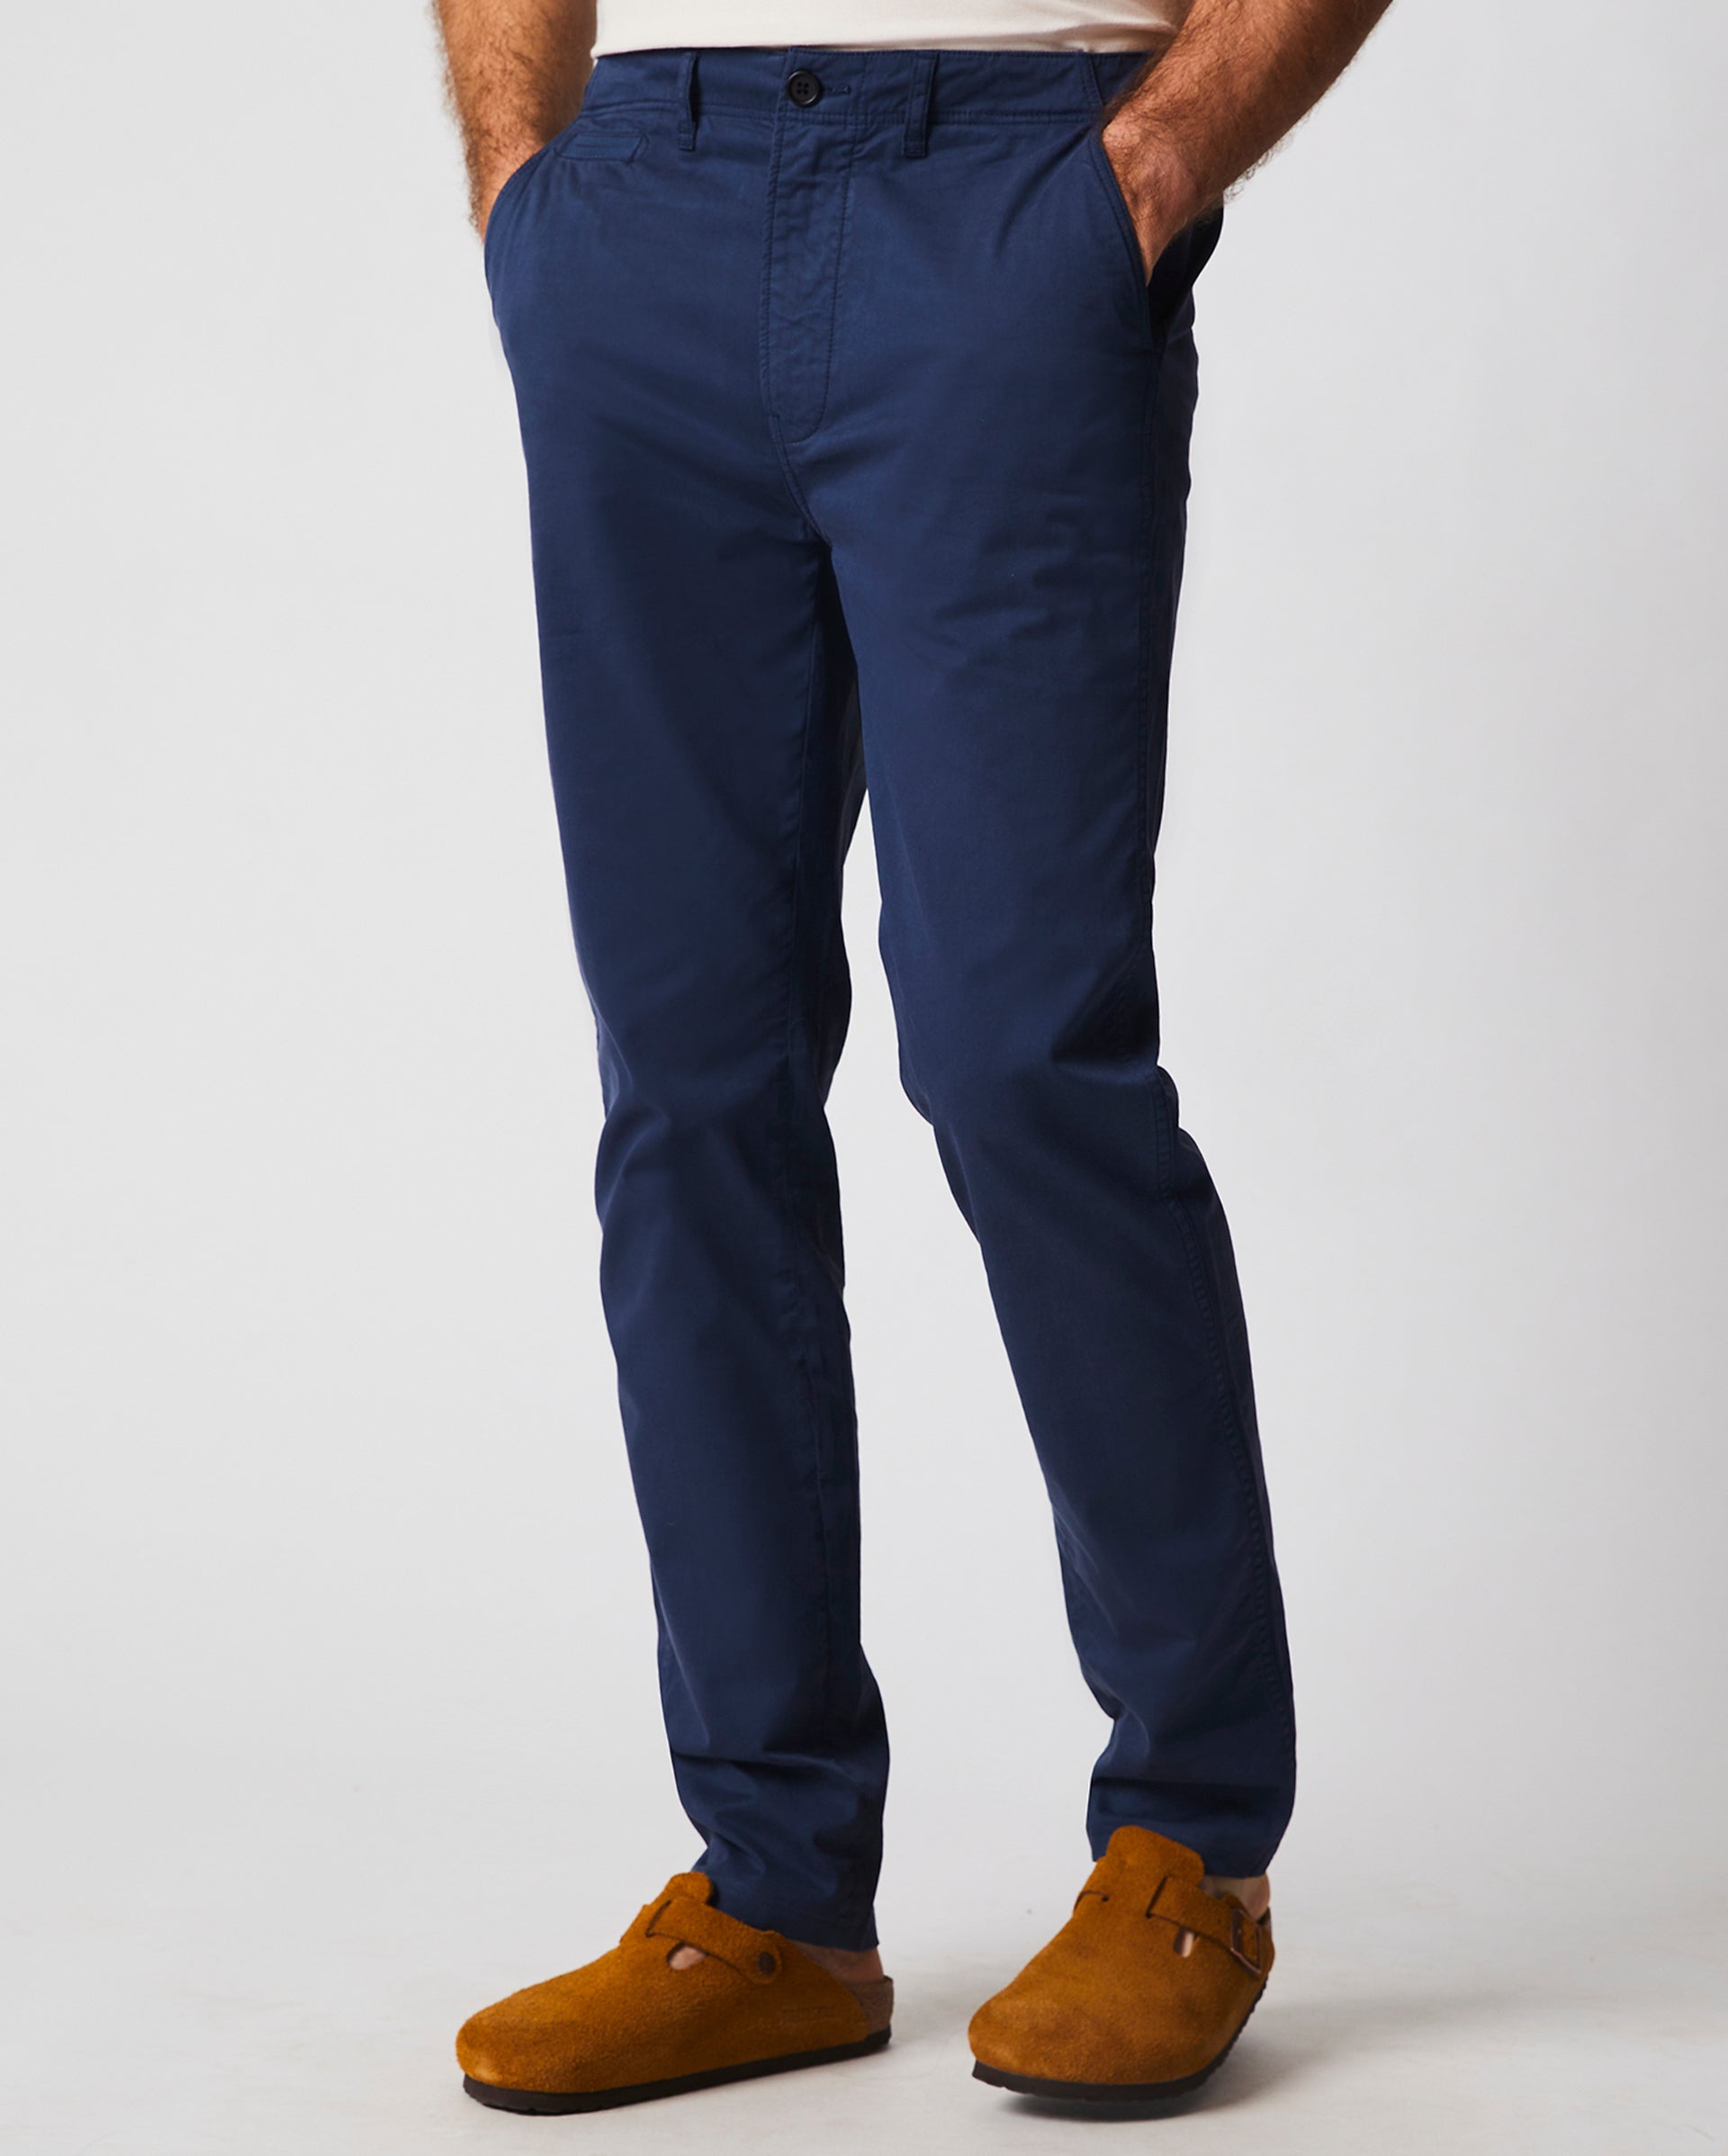 Men's Chino Pant – Navy Blue – Moose Clothing Company